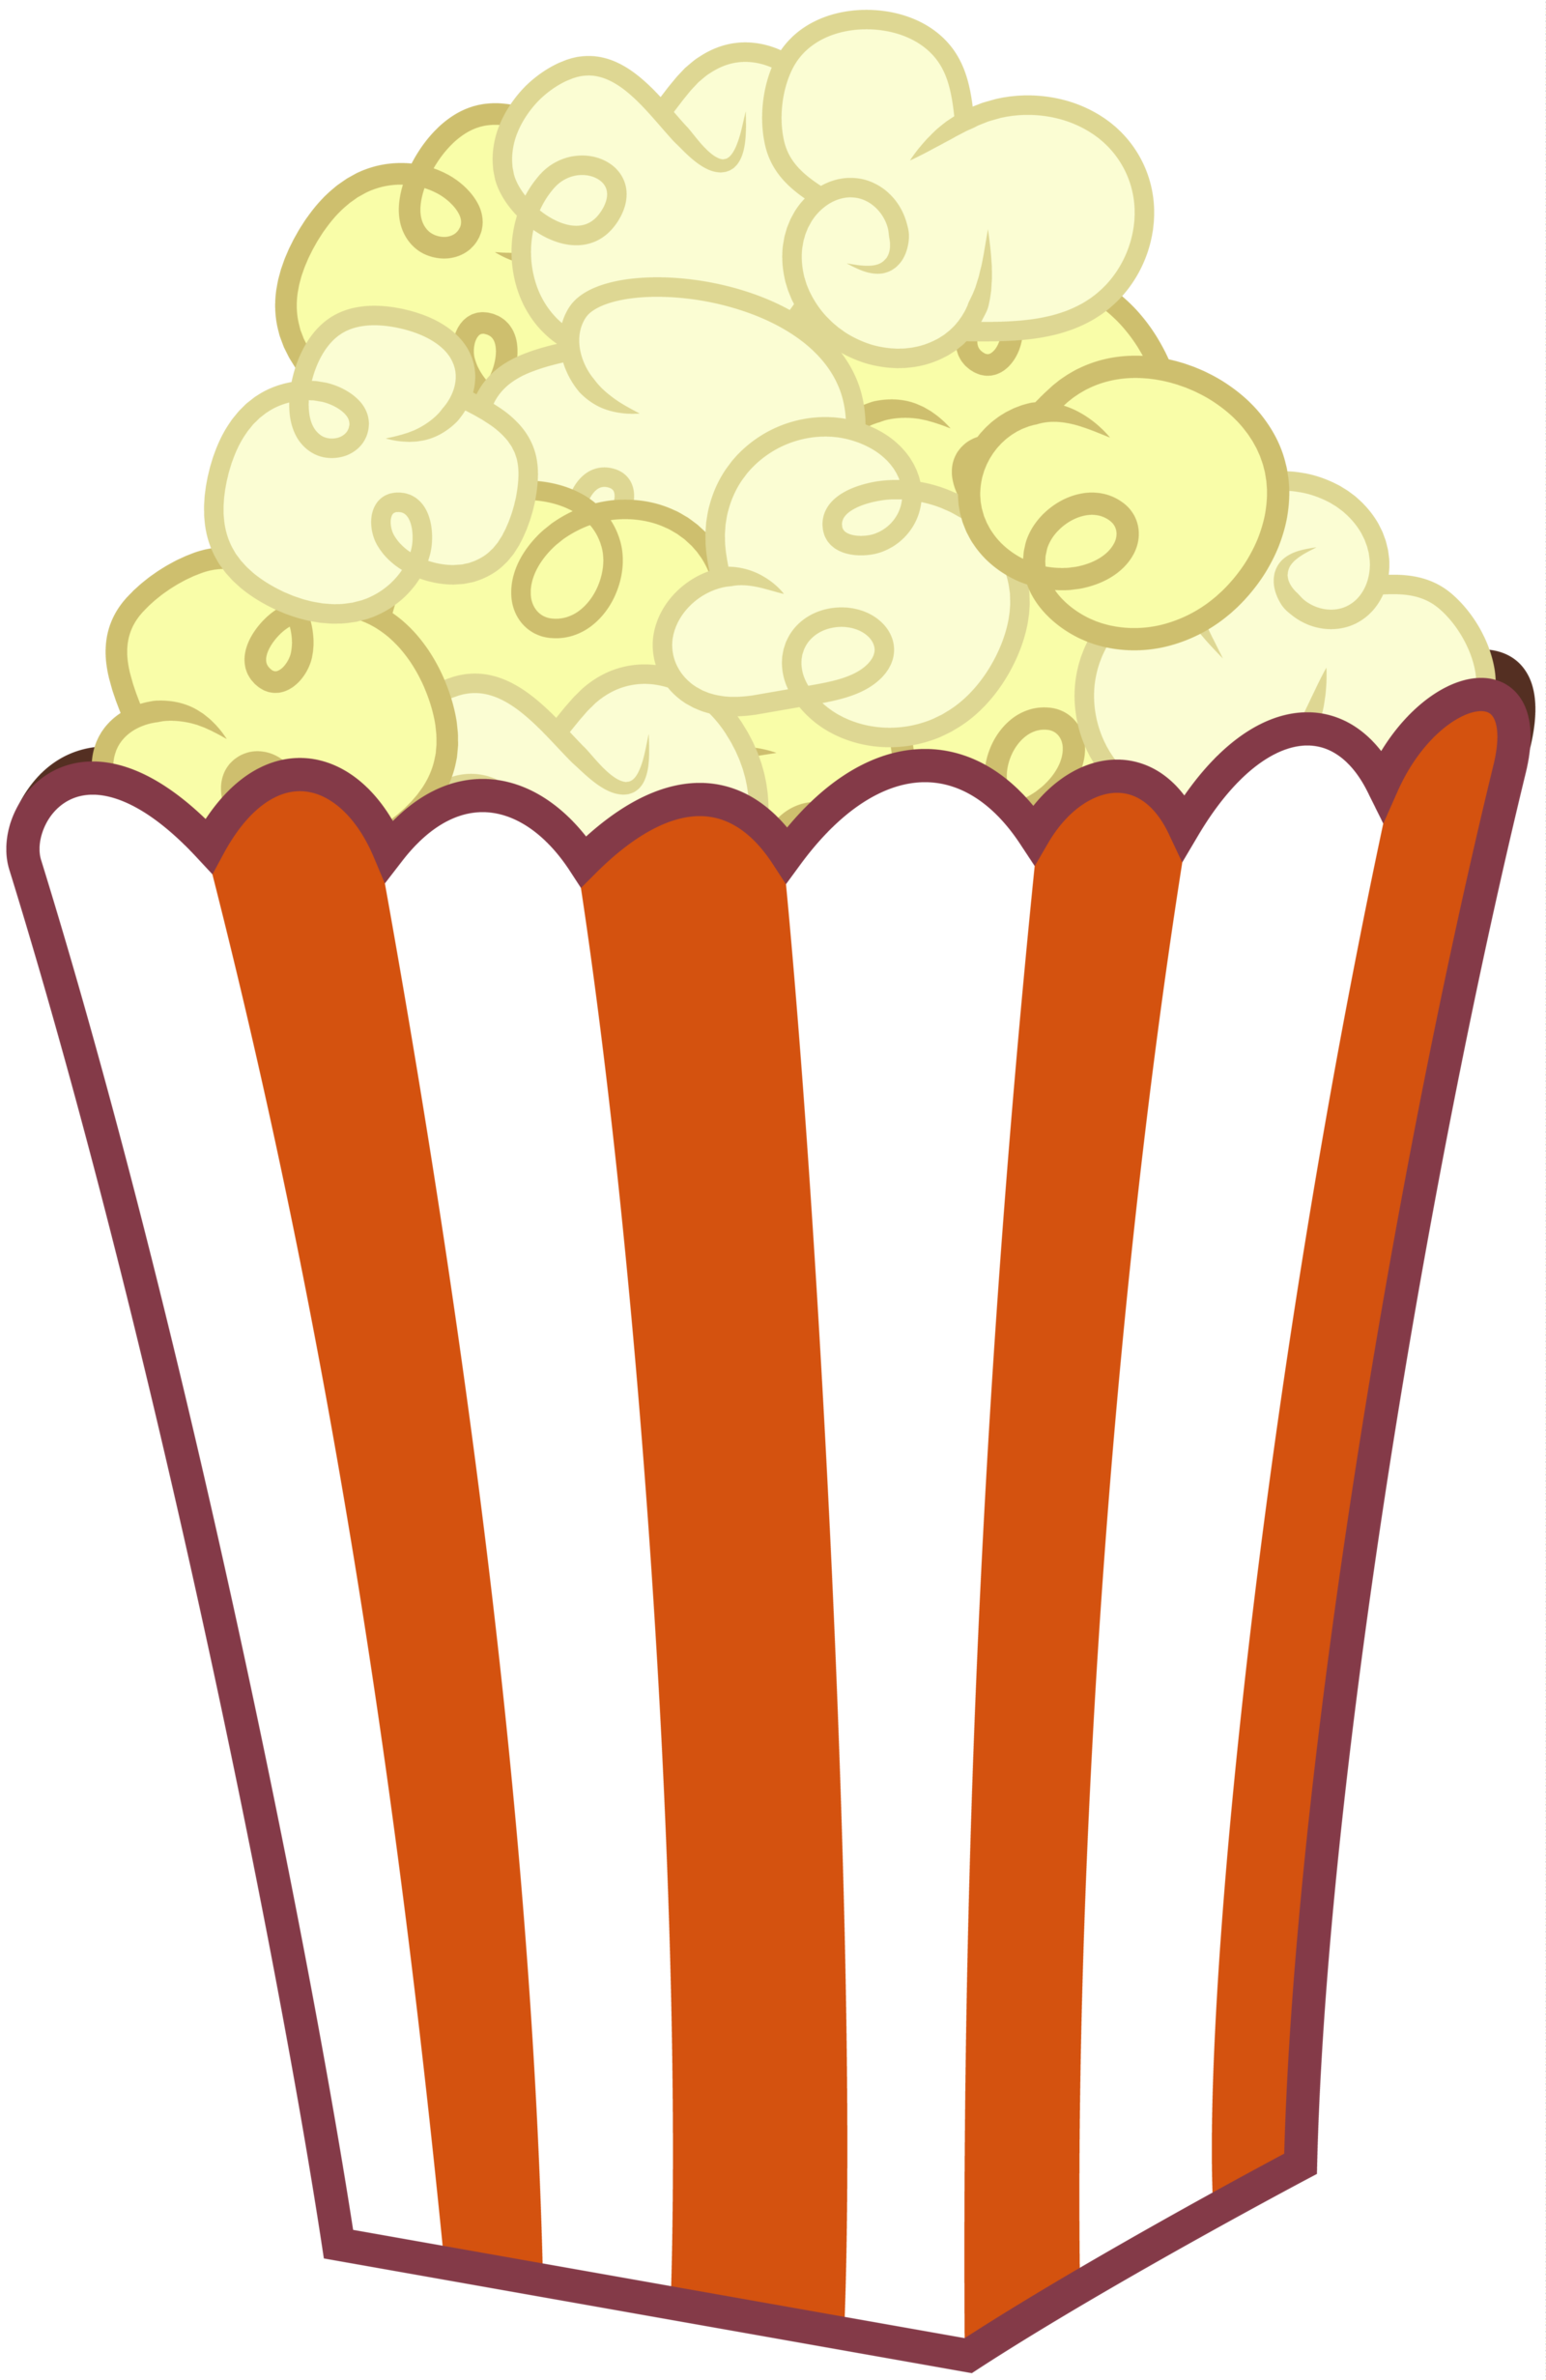 clip art images popcorn - photo #15